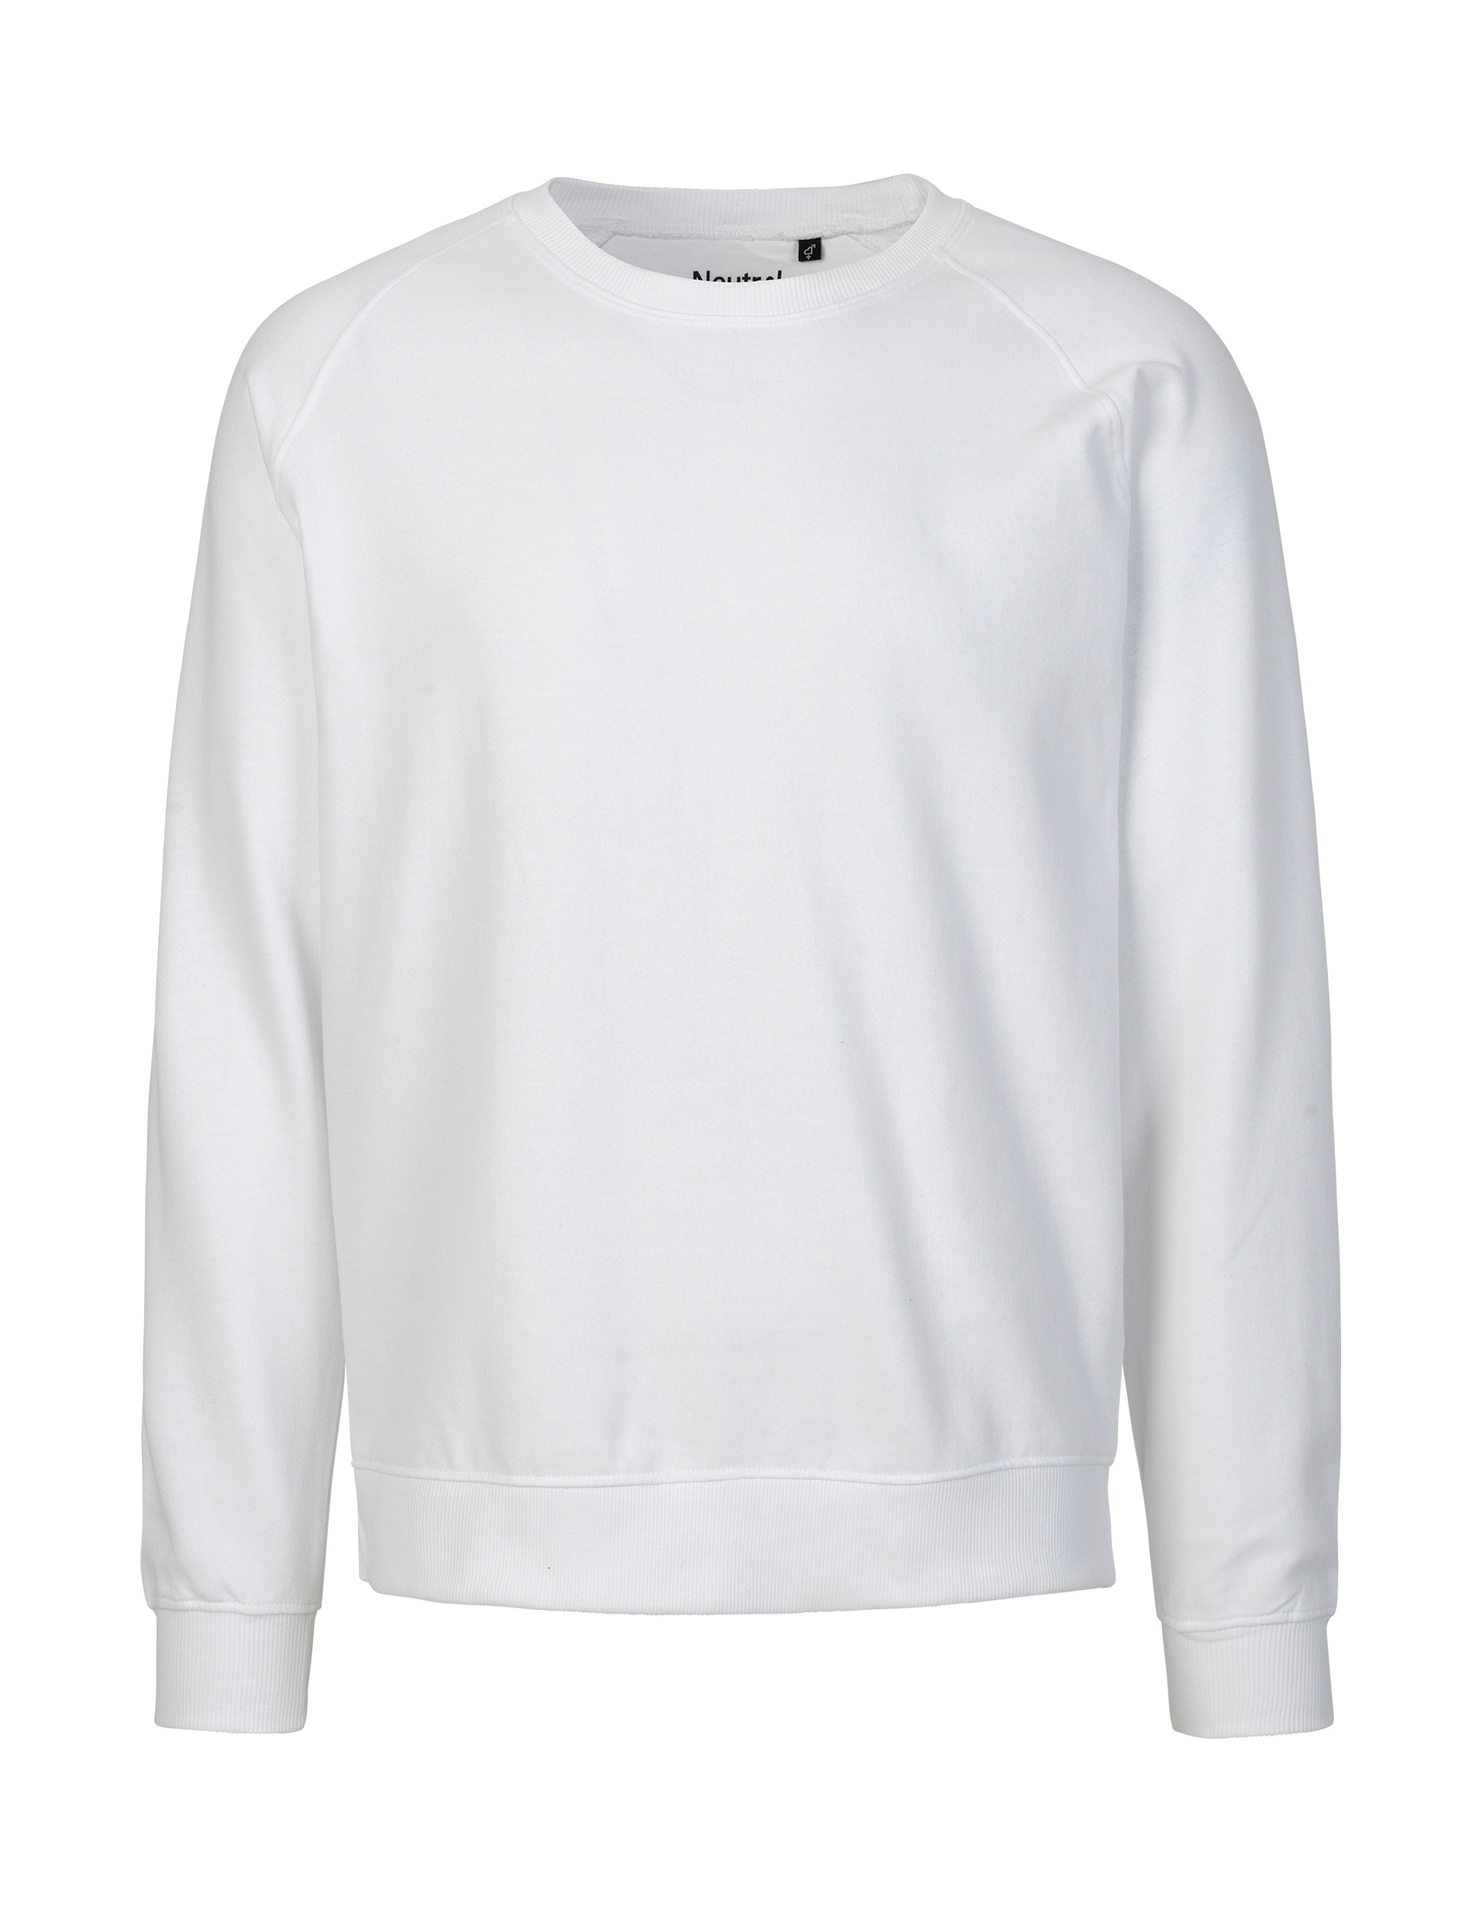 [PR/02652] Unisex Sweatshirt (White 01, XS)